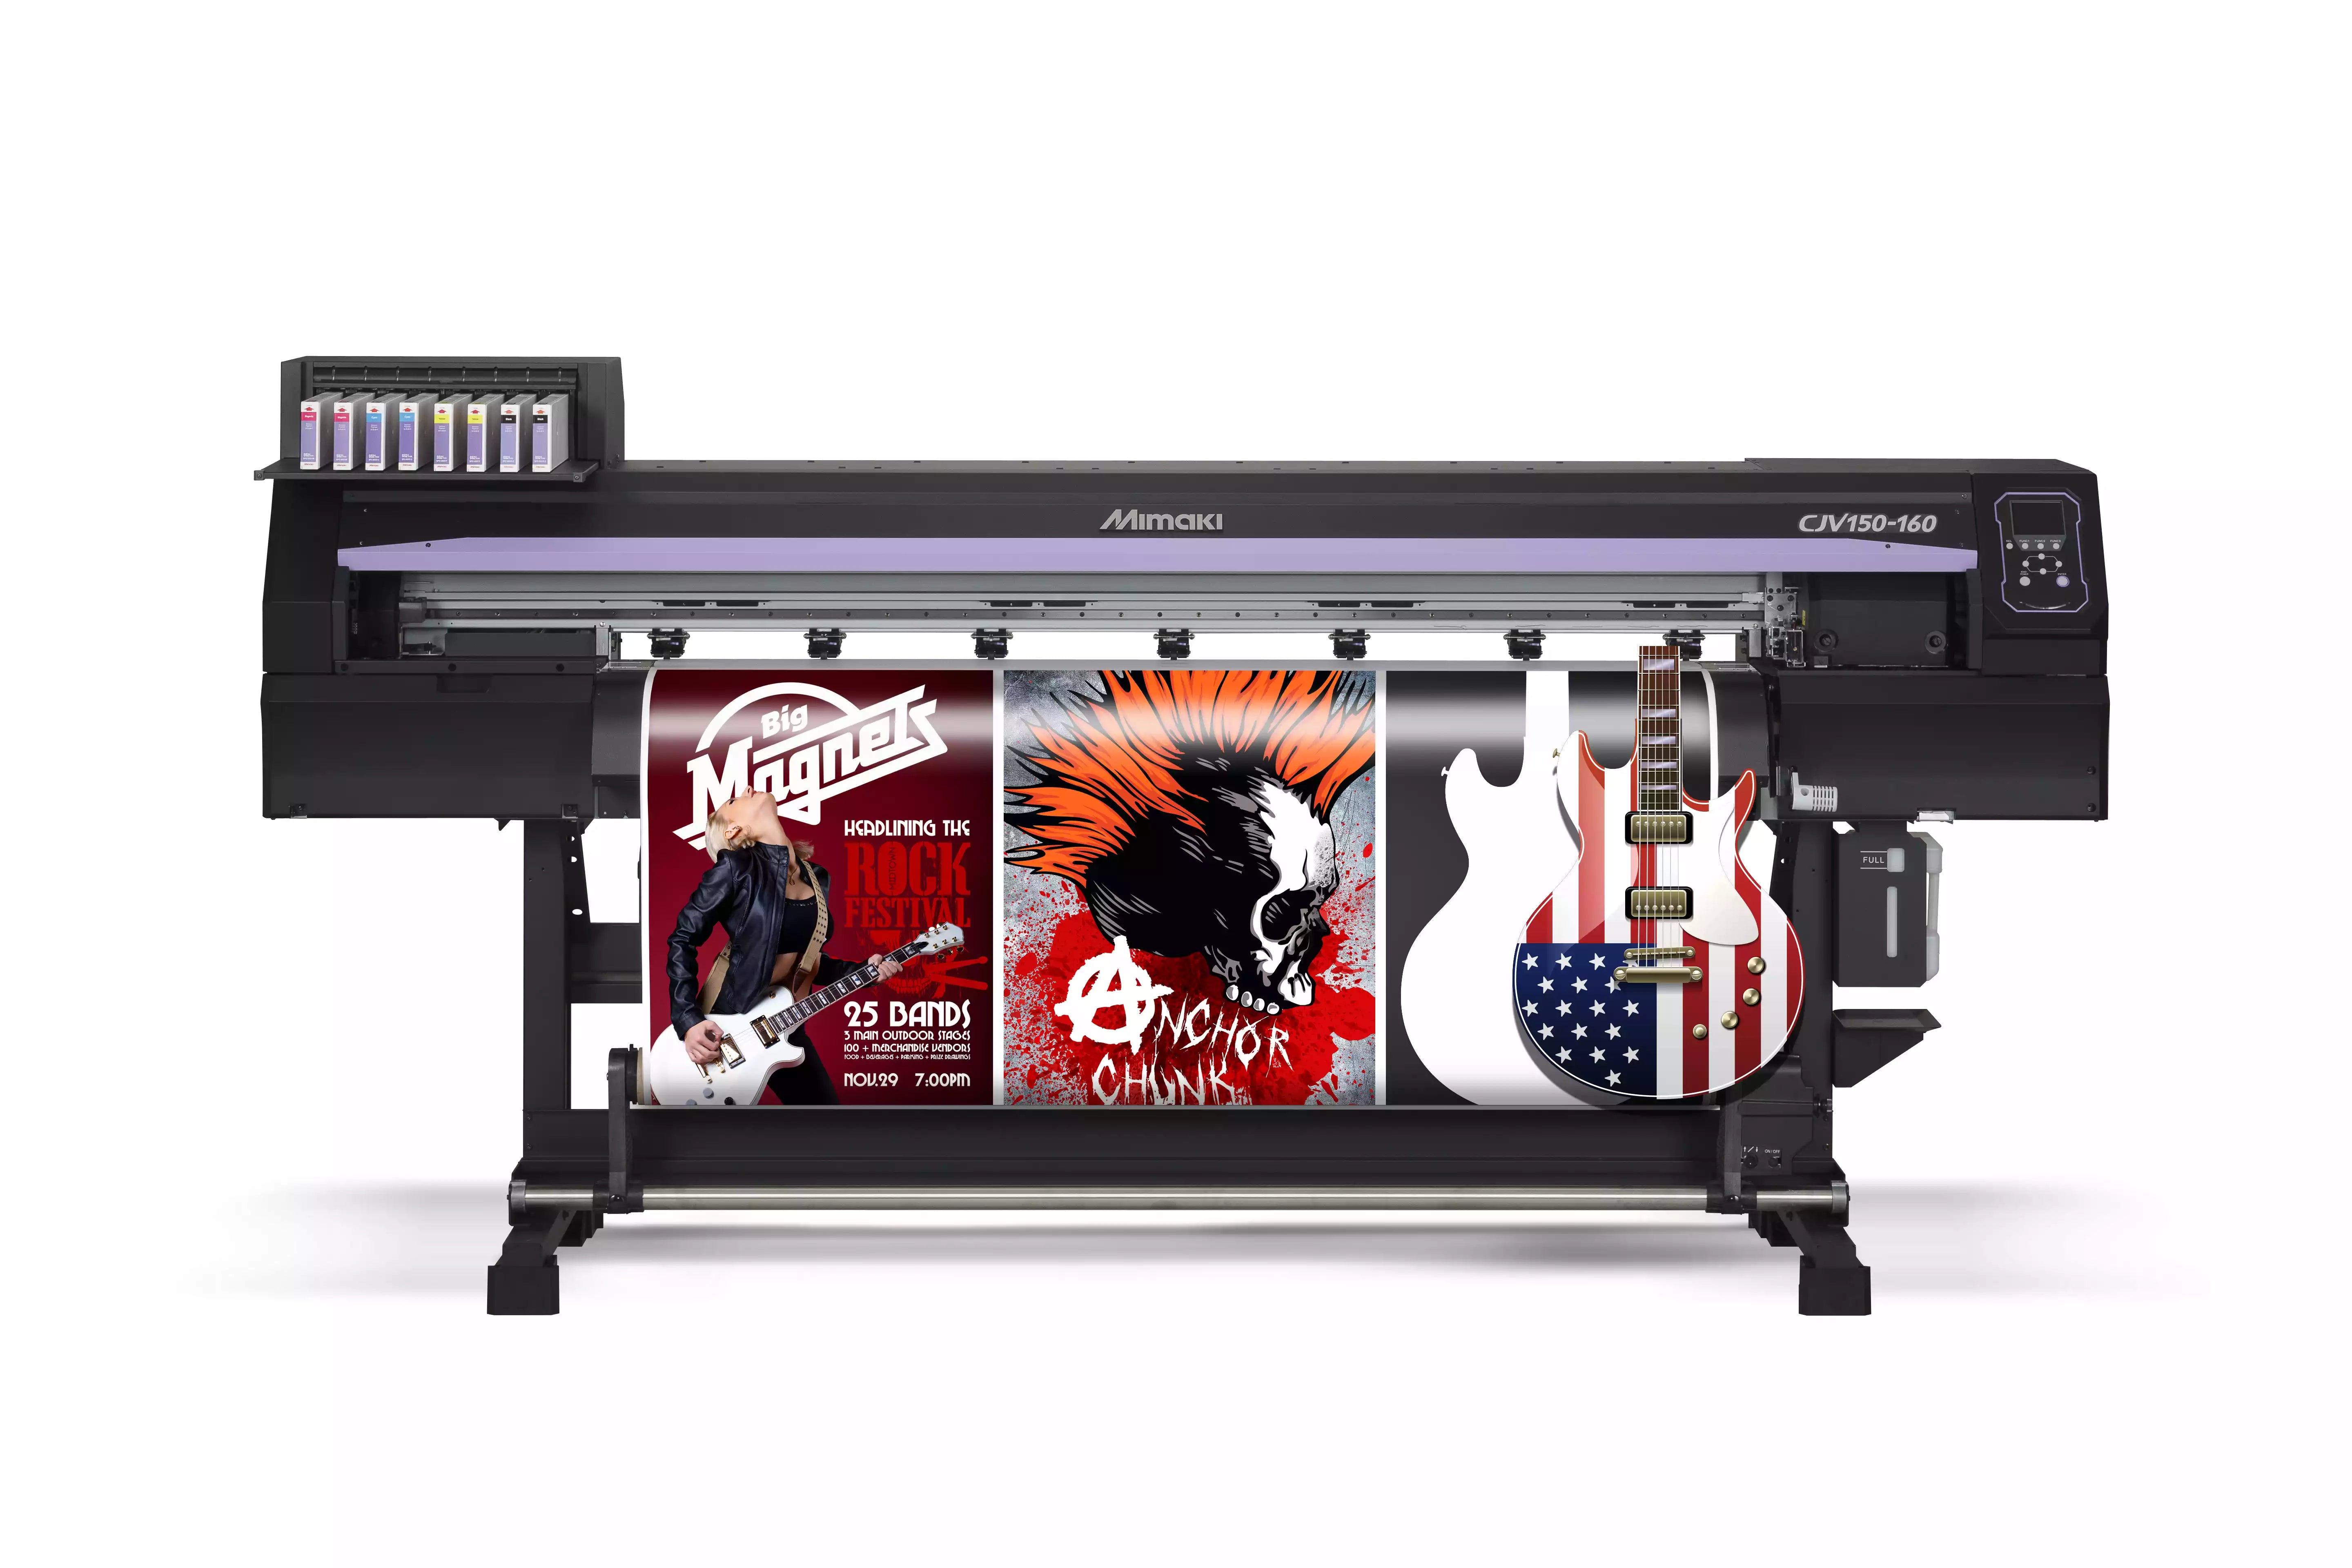 Mimaki CJV 150-160 printer poster applications being printed